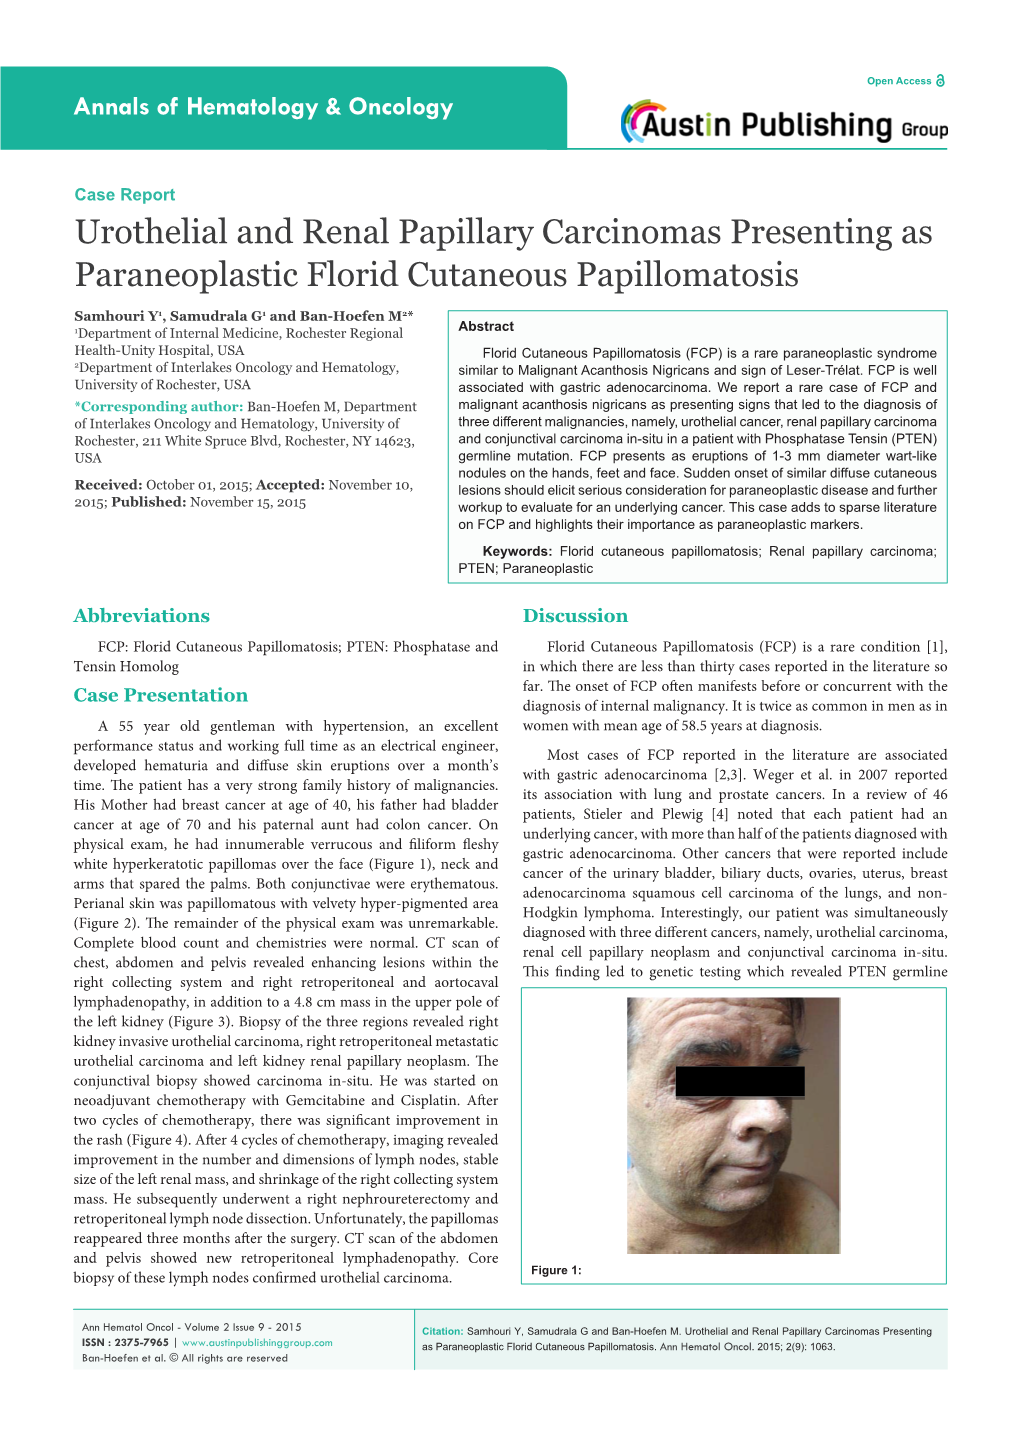 Urothelial and Renal Papillary Carcinomas Presenting As Paraneoplastic Florid Cutaneous Papillomatosis